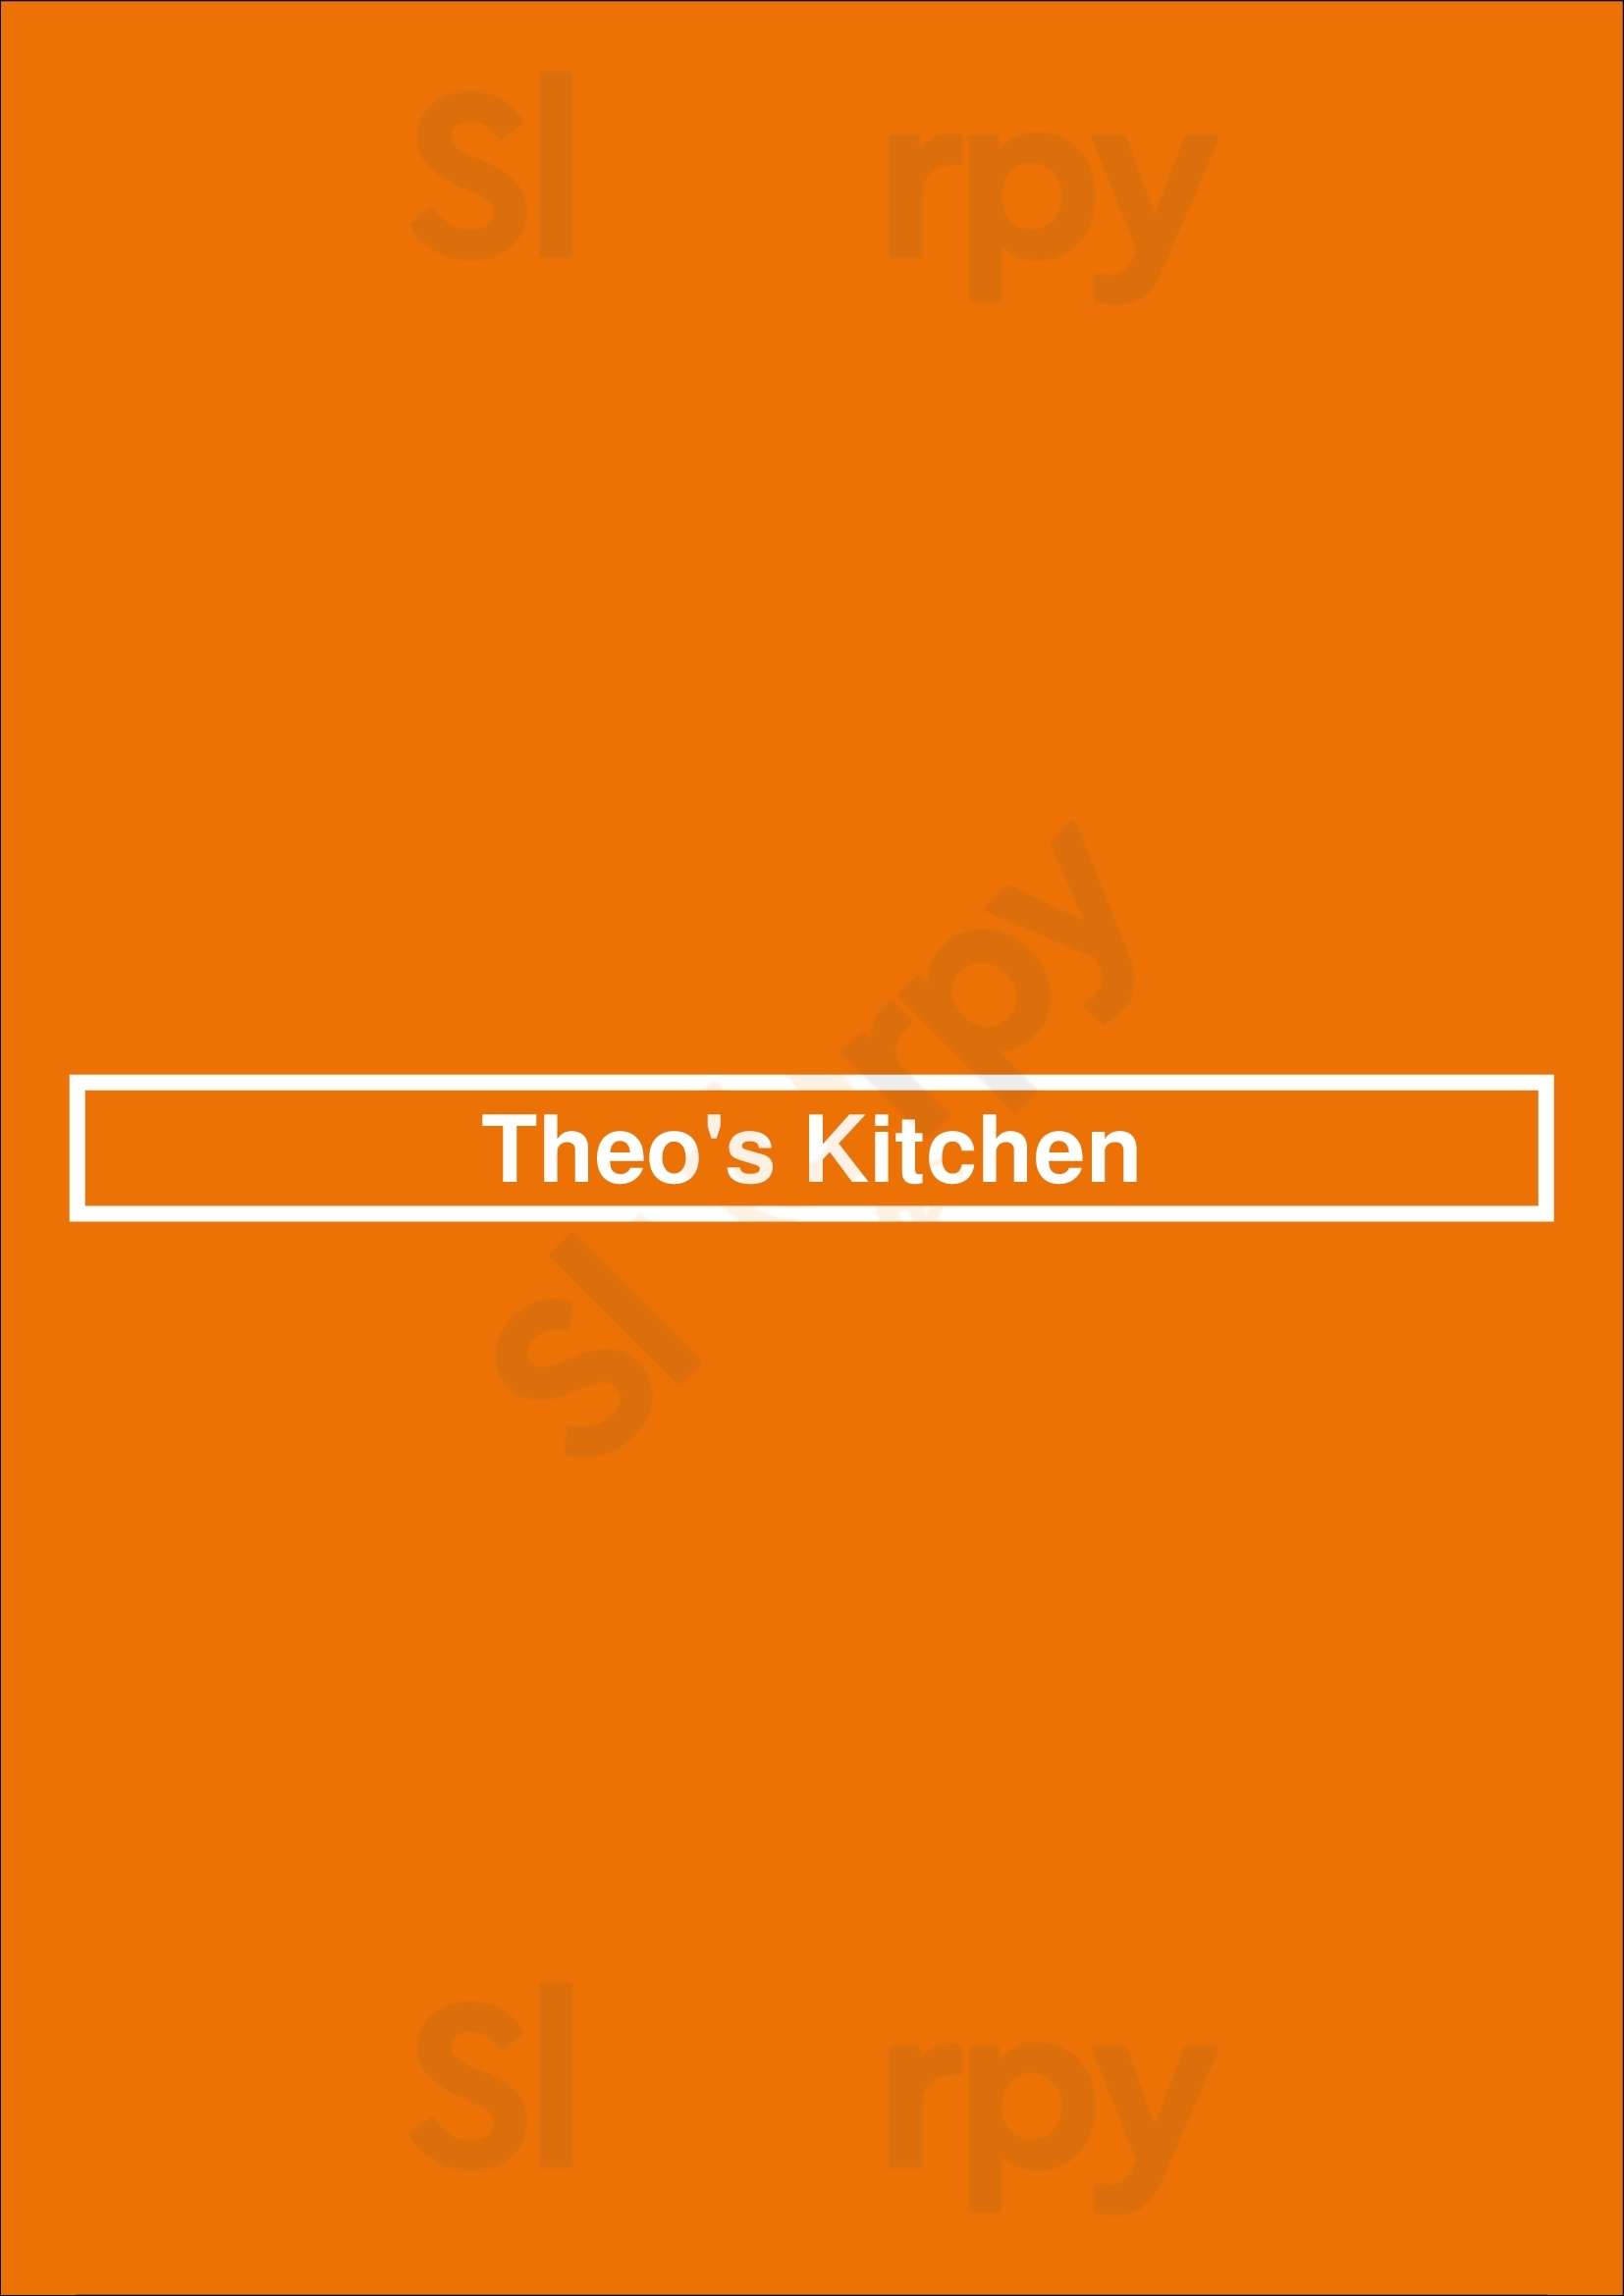 Theo's Kitchen Orlando Menu - 1